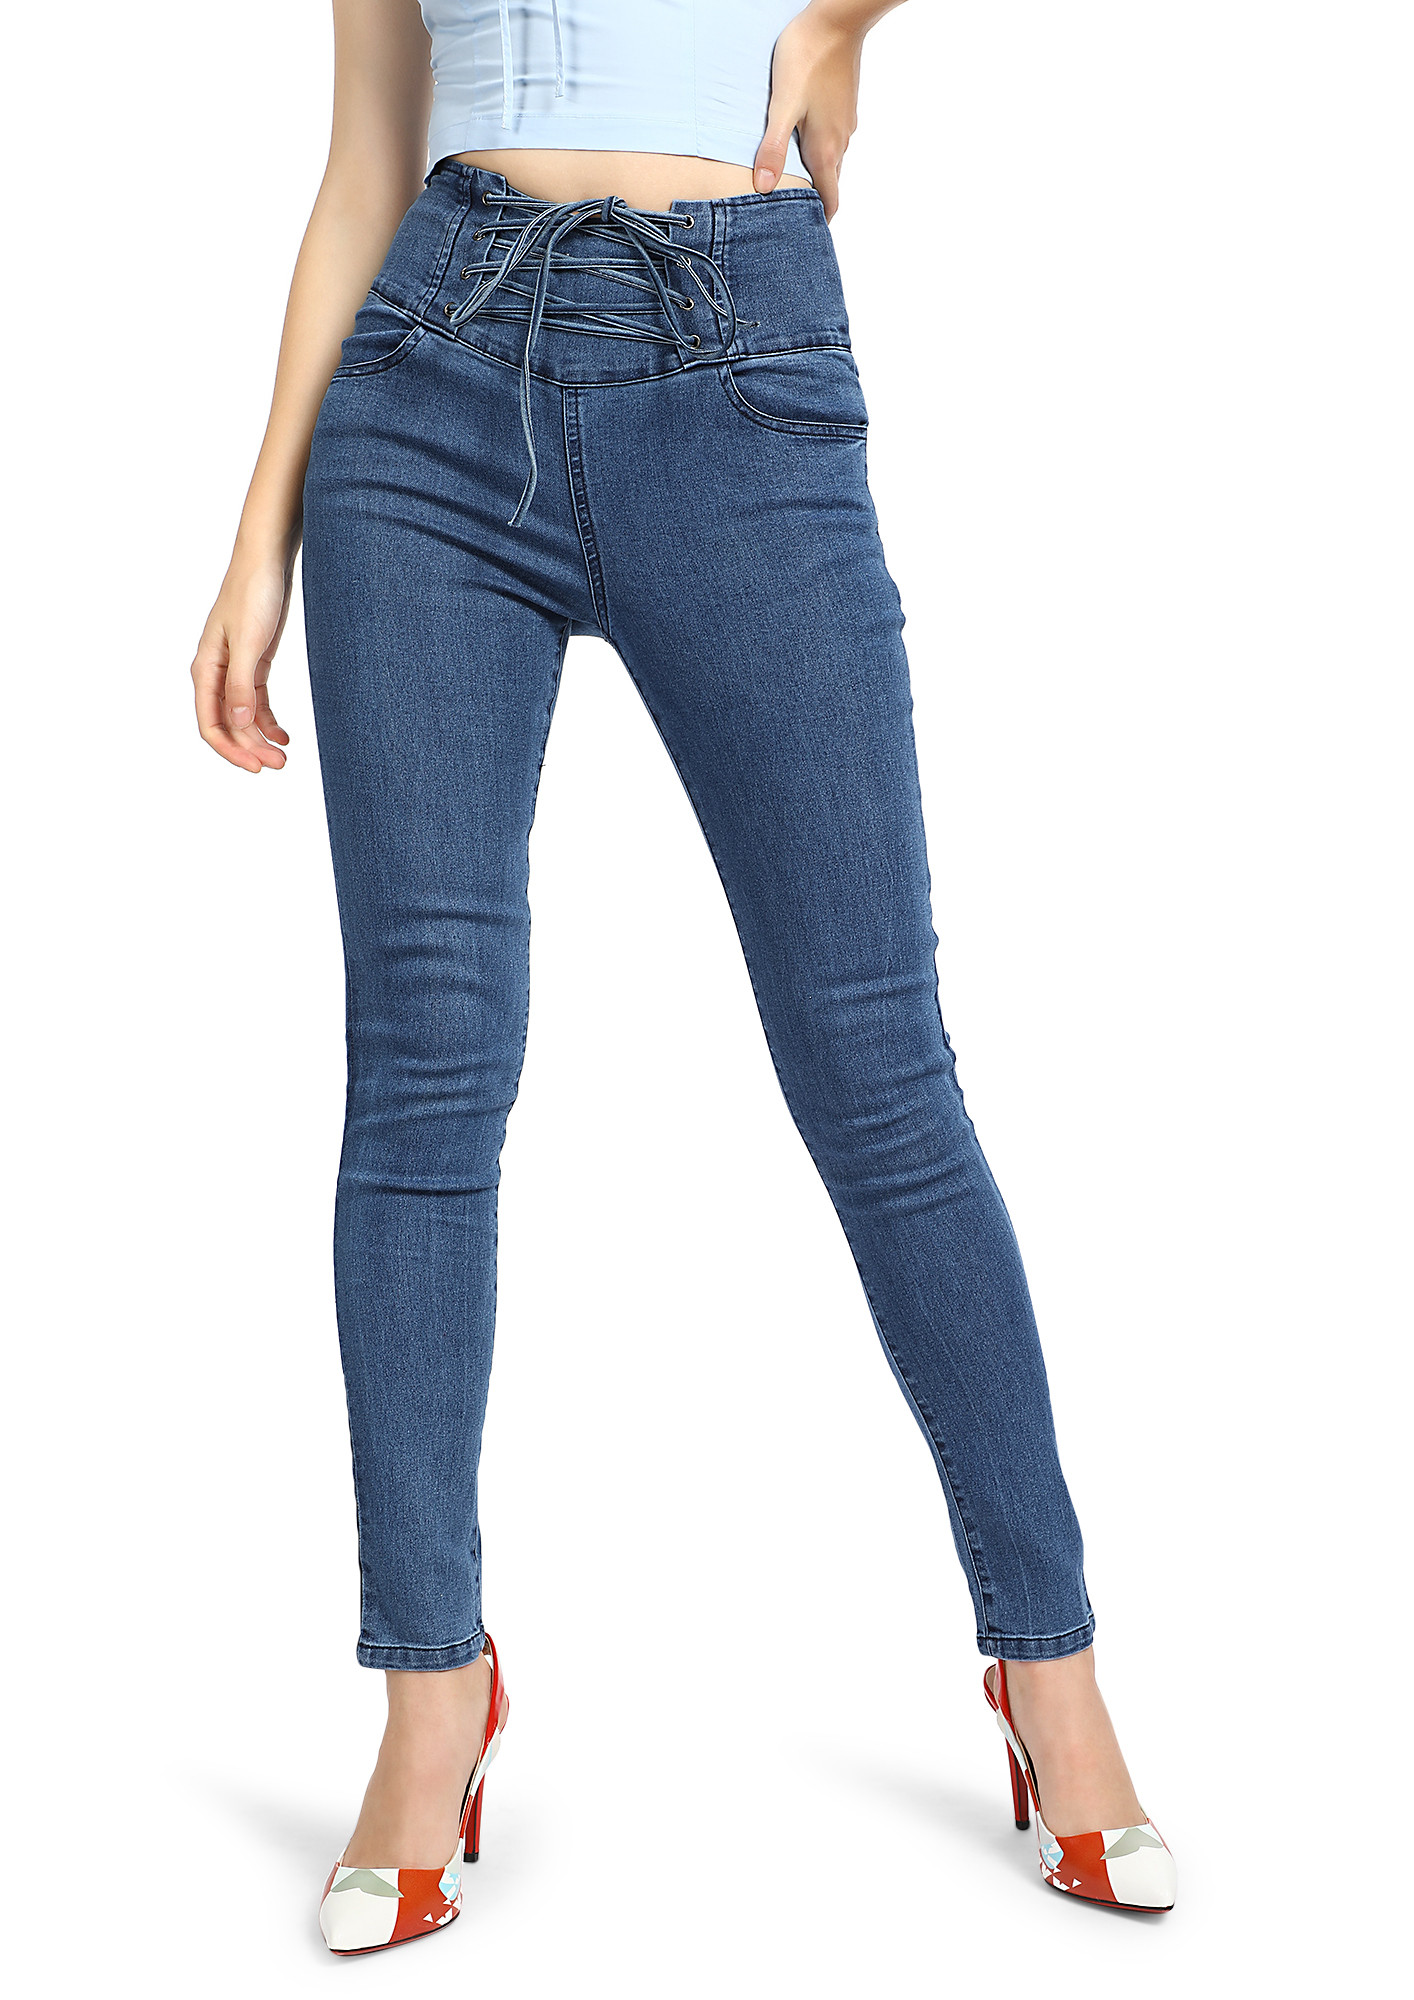 Tight Jeans For Women - Buy Tight Jeans For Women online in India